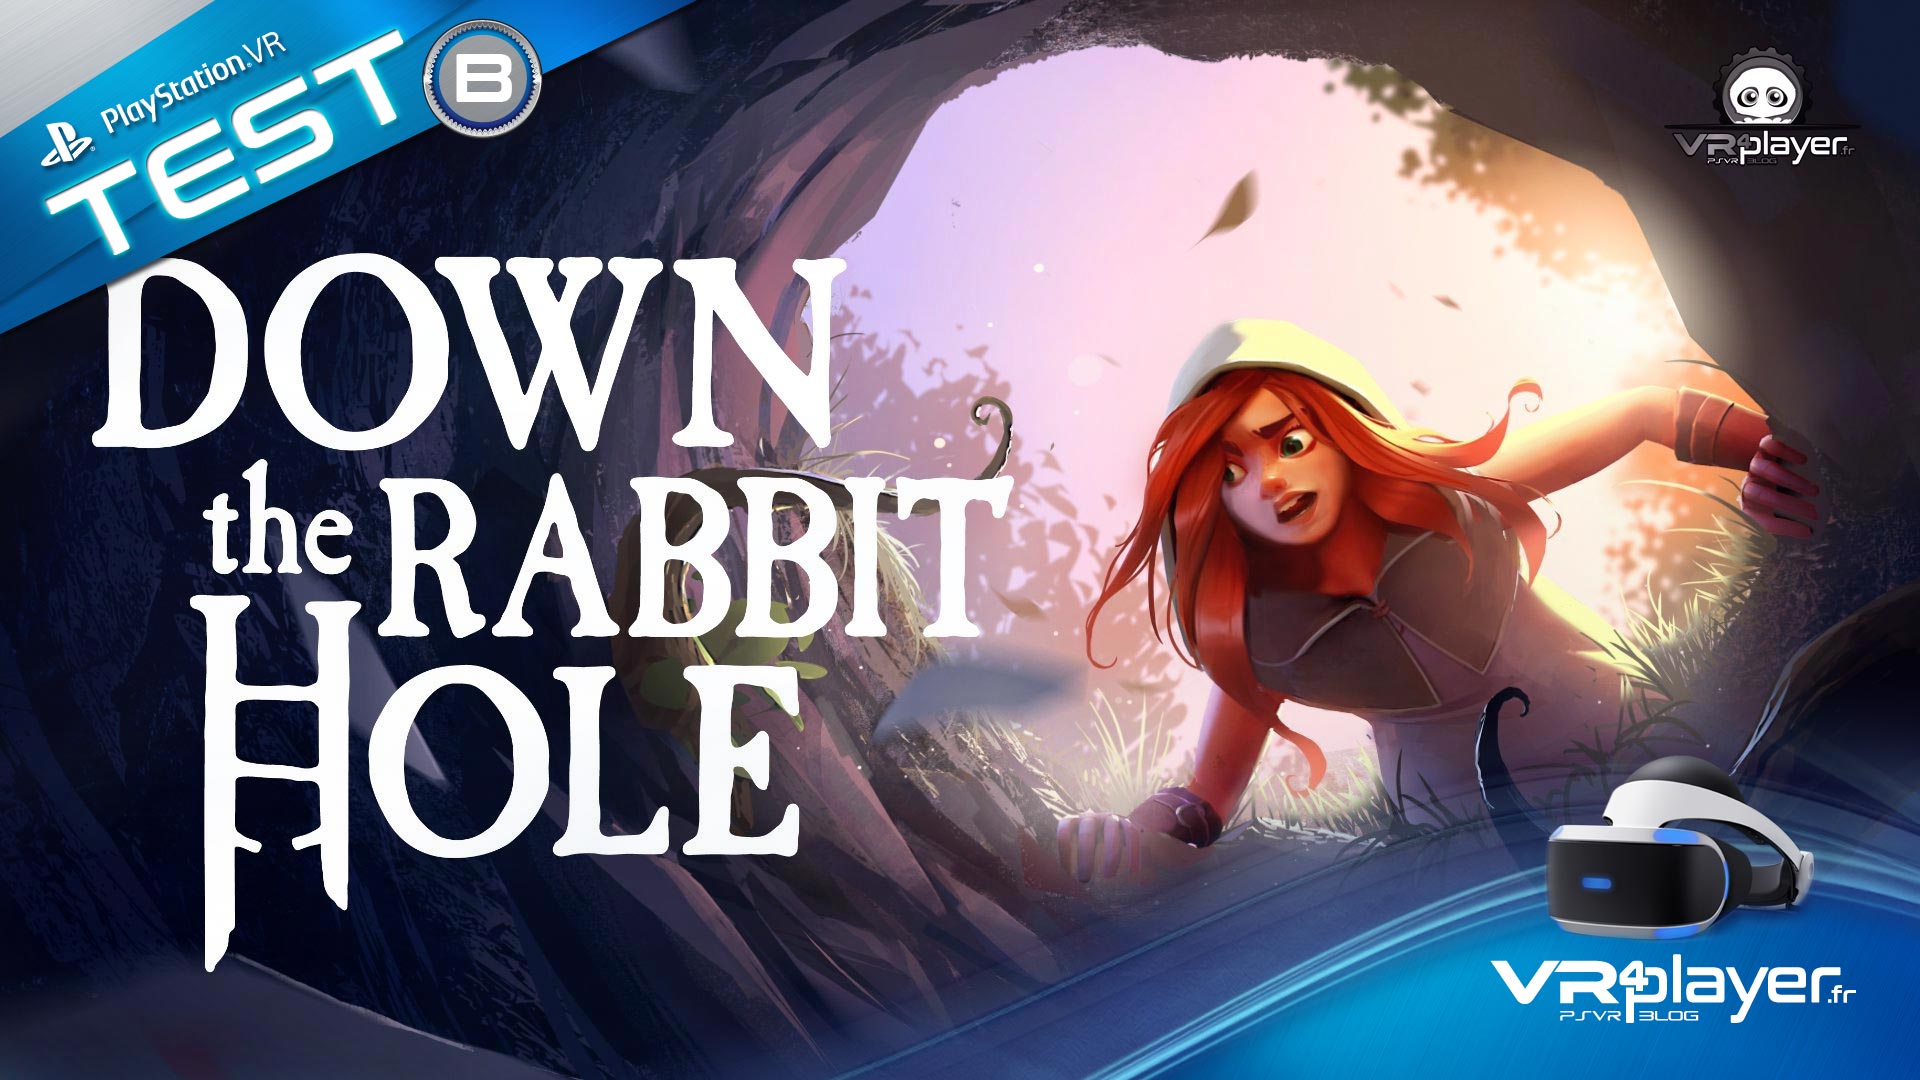 Ребит хол. Down the Rabbit hole. Rabbit hole игра. Down the Rabbit hole VR Oculus. Down the Rabbit hole v430+01.03 -qu.